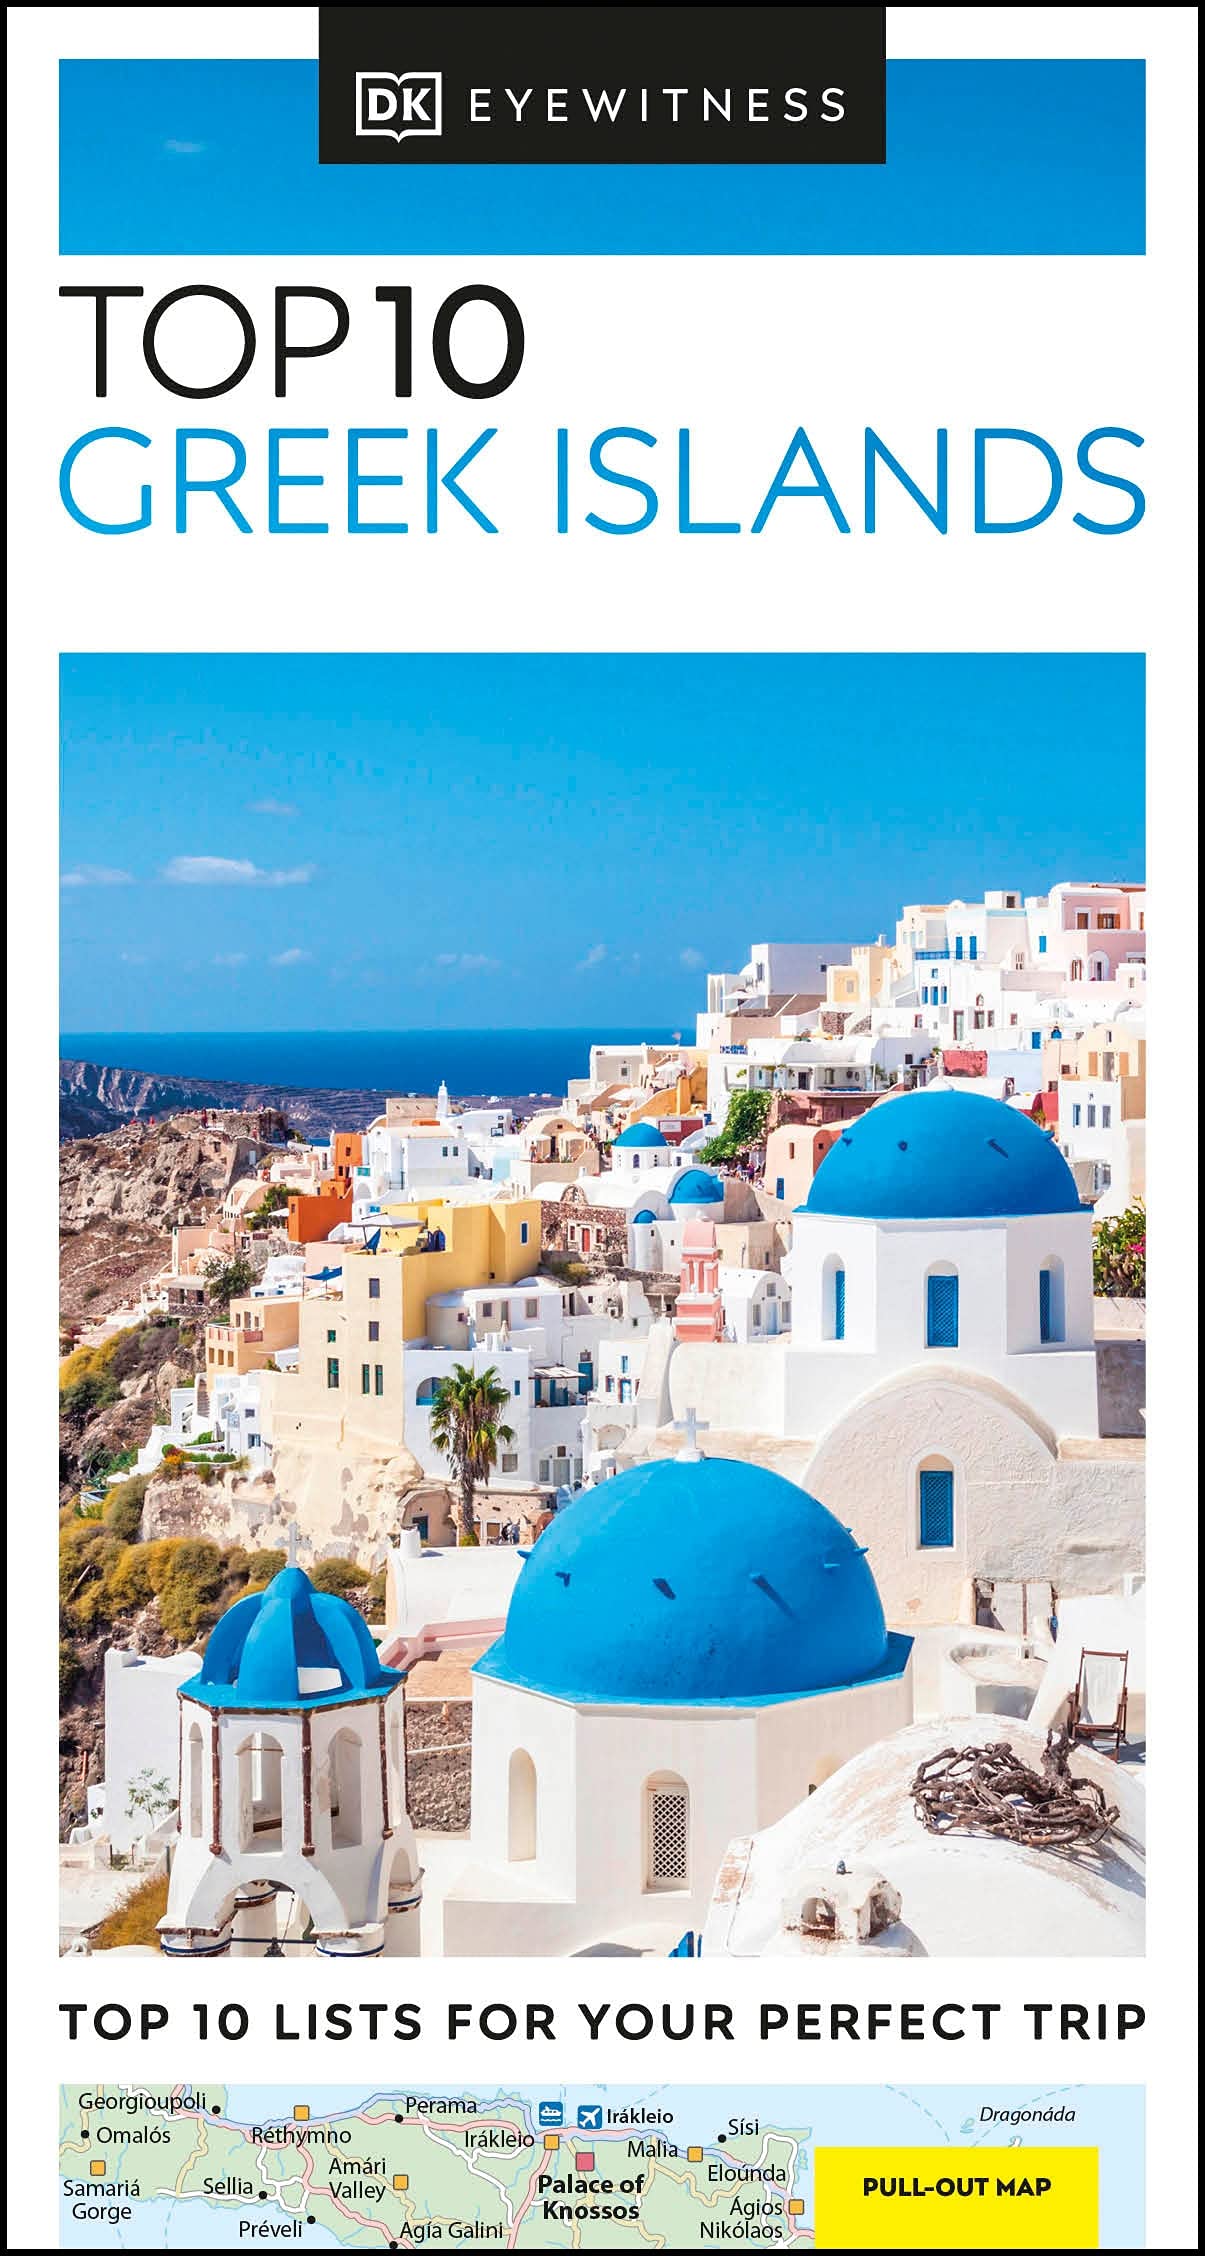 DK Eyewitness Top 10 Greek Islands (2022)